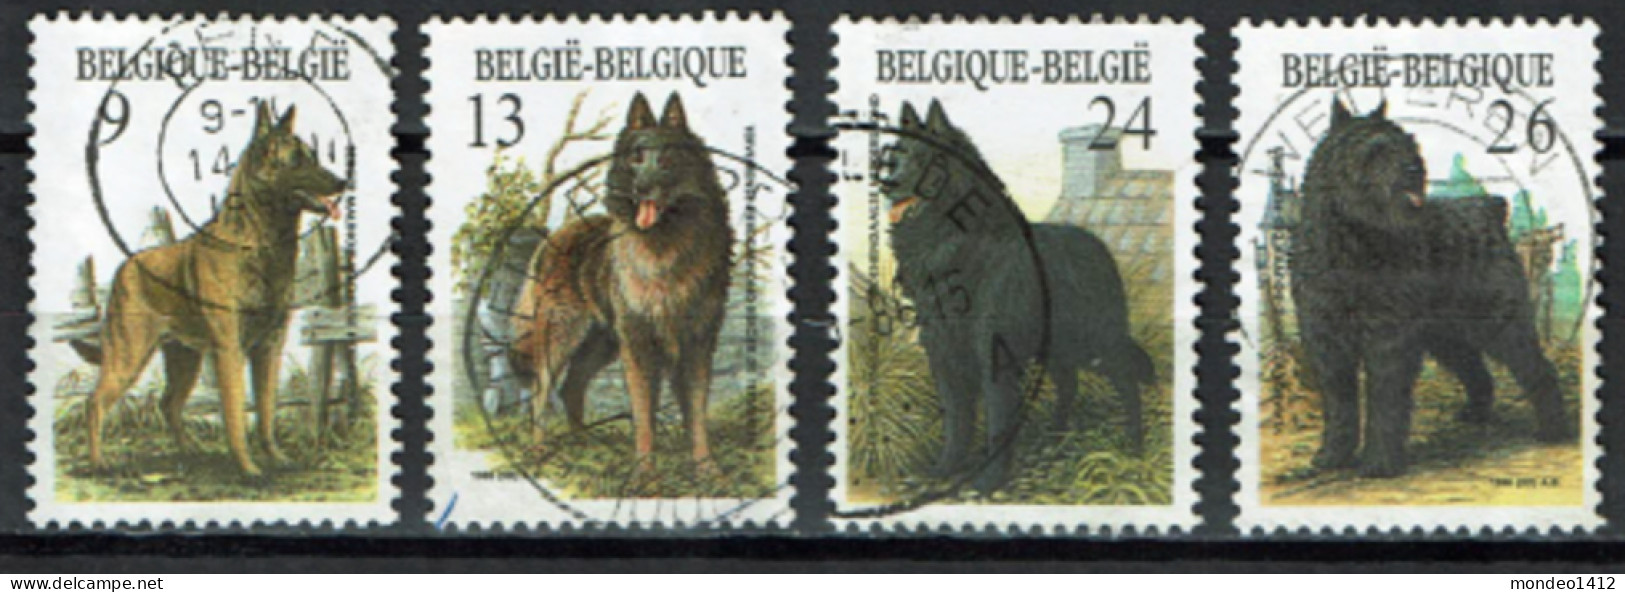 België 1986 OBP 2213/2216 - Y&T 2213/16 - Honden, Dogs, Chiens - Herdershond - Berger, Bouvier - Used Stamps